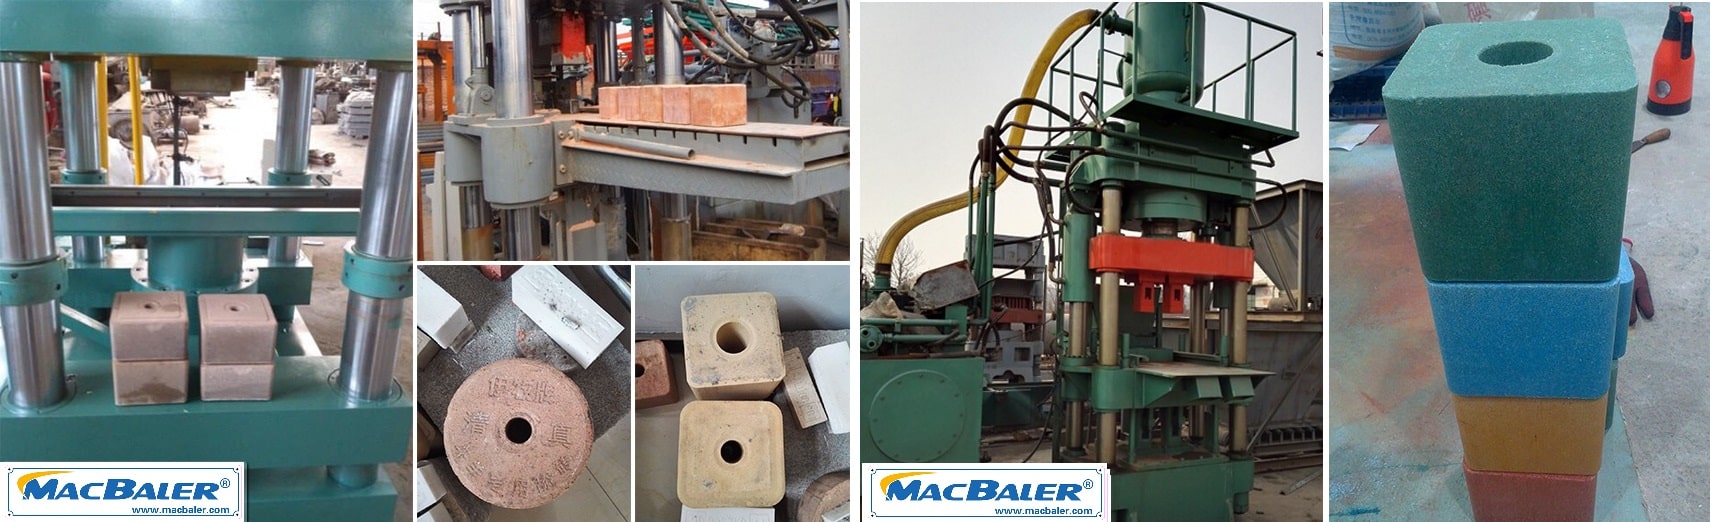 MacBaler- briquetting machine for sale1